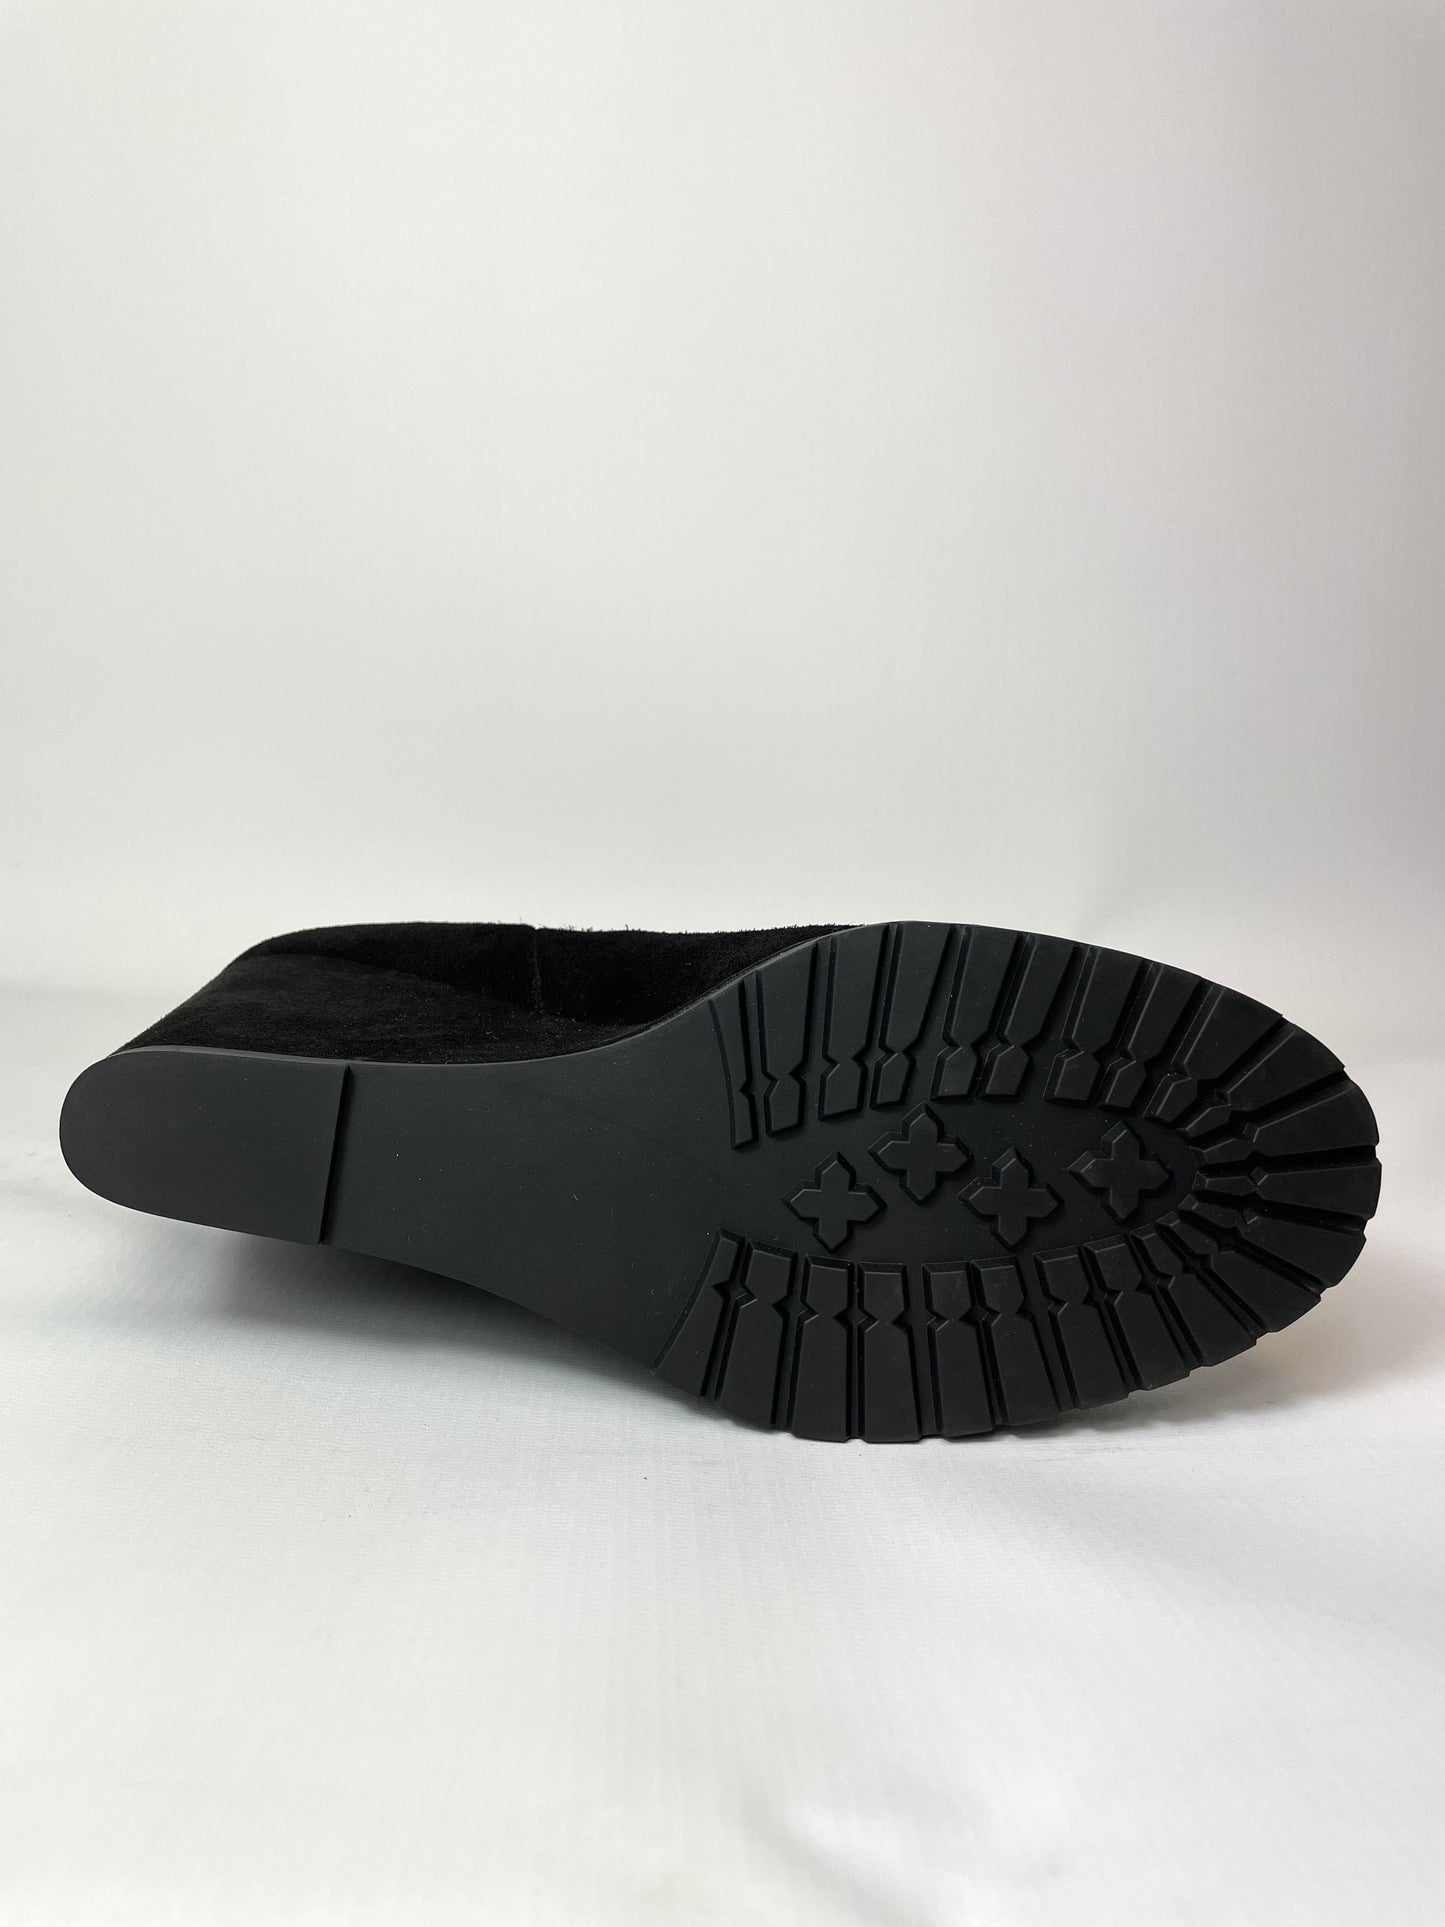 Women’s Leather Slip-on Ankle Boots Black UK 5 / EU 38